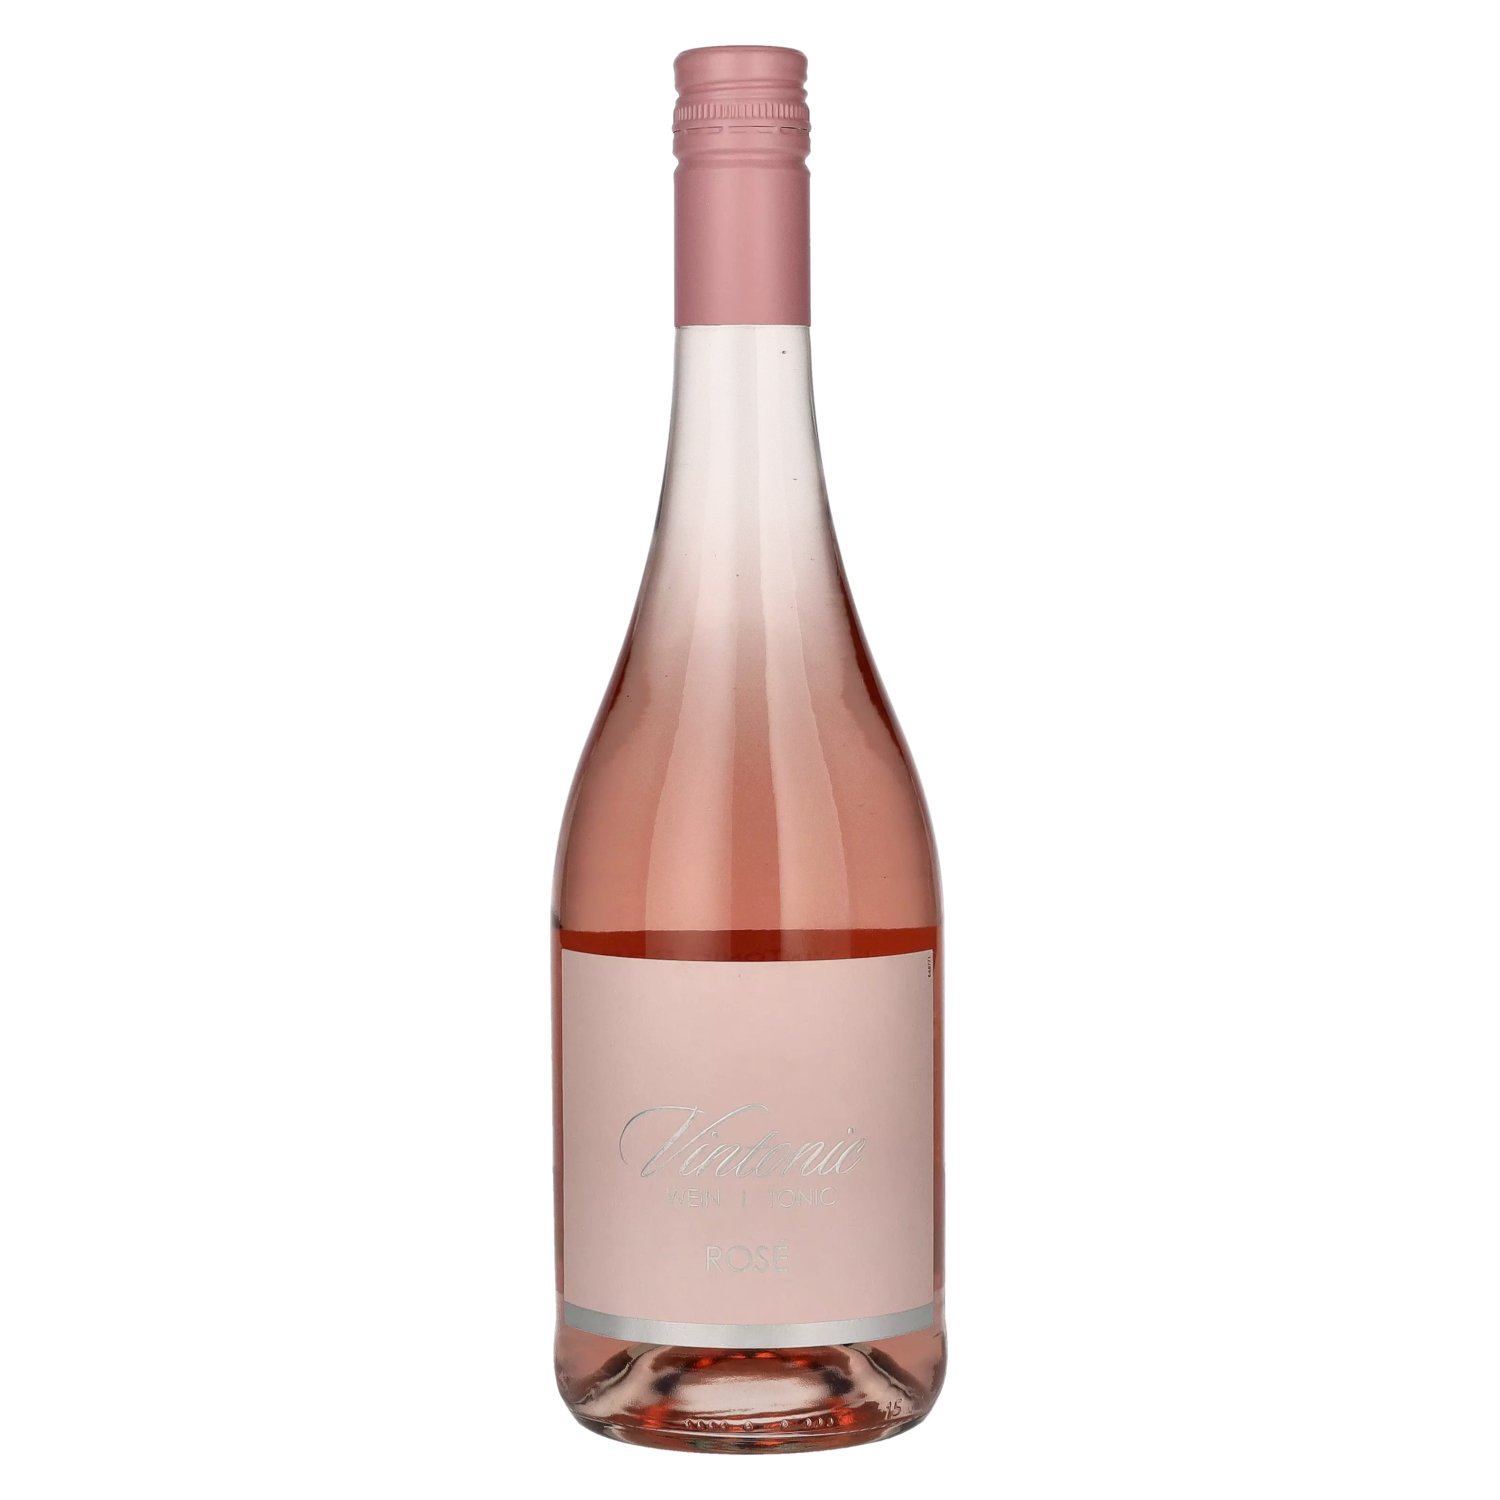 VinTonic Wein & Tonic Rosé 5,7% Vol. 0,75l - delicando